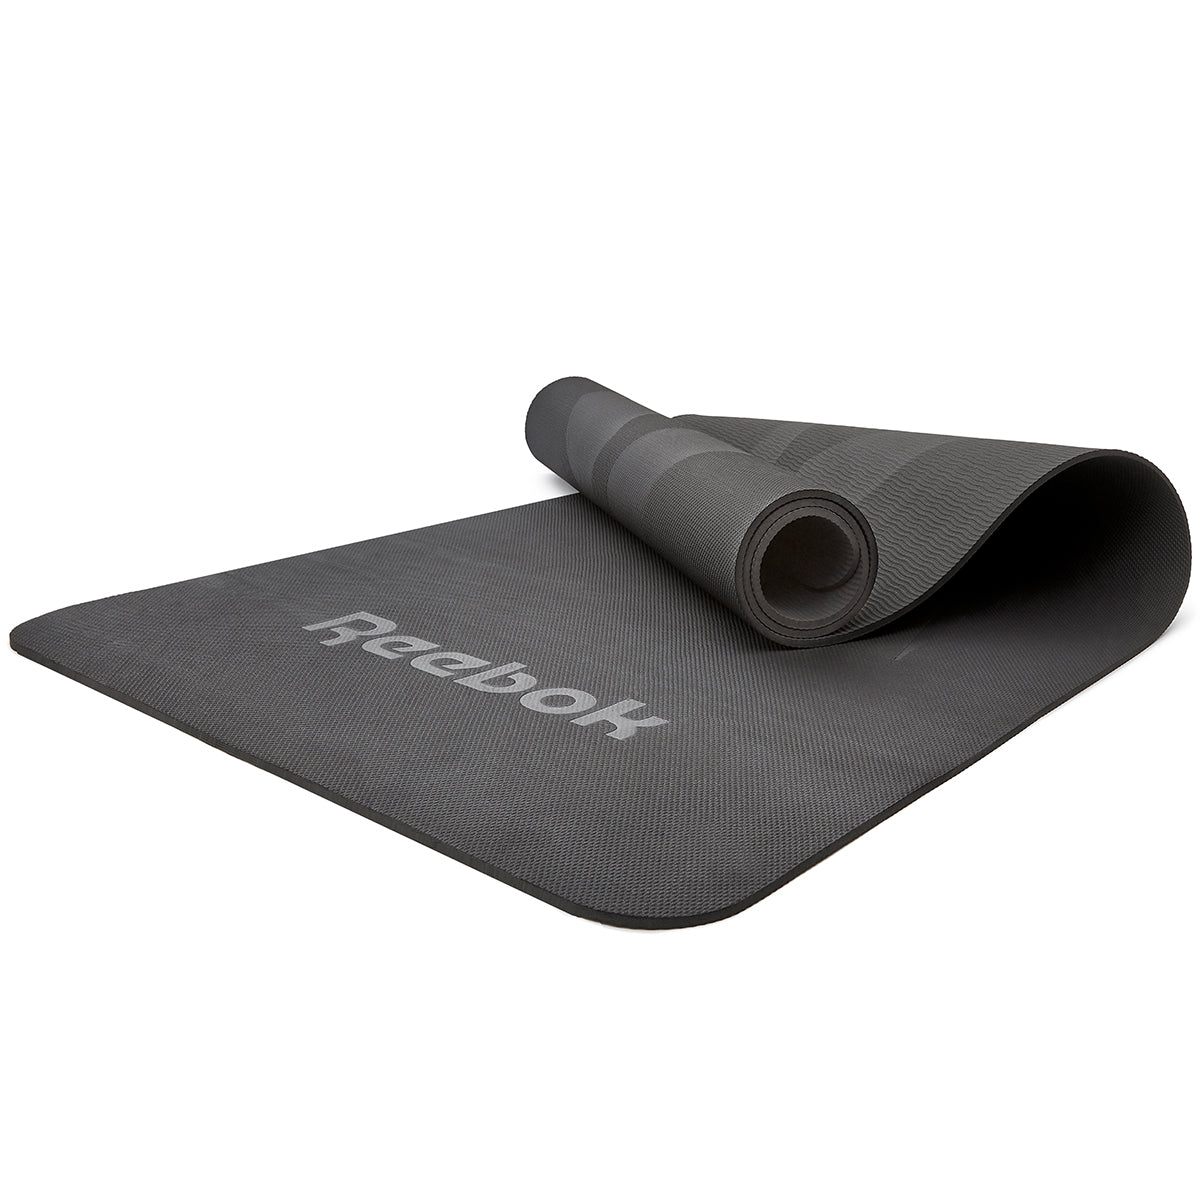 Reebok Yoga Mat (5mm, Black) | Reebok Fitness: Fitness Equipment